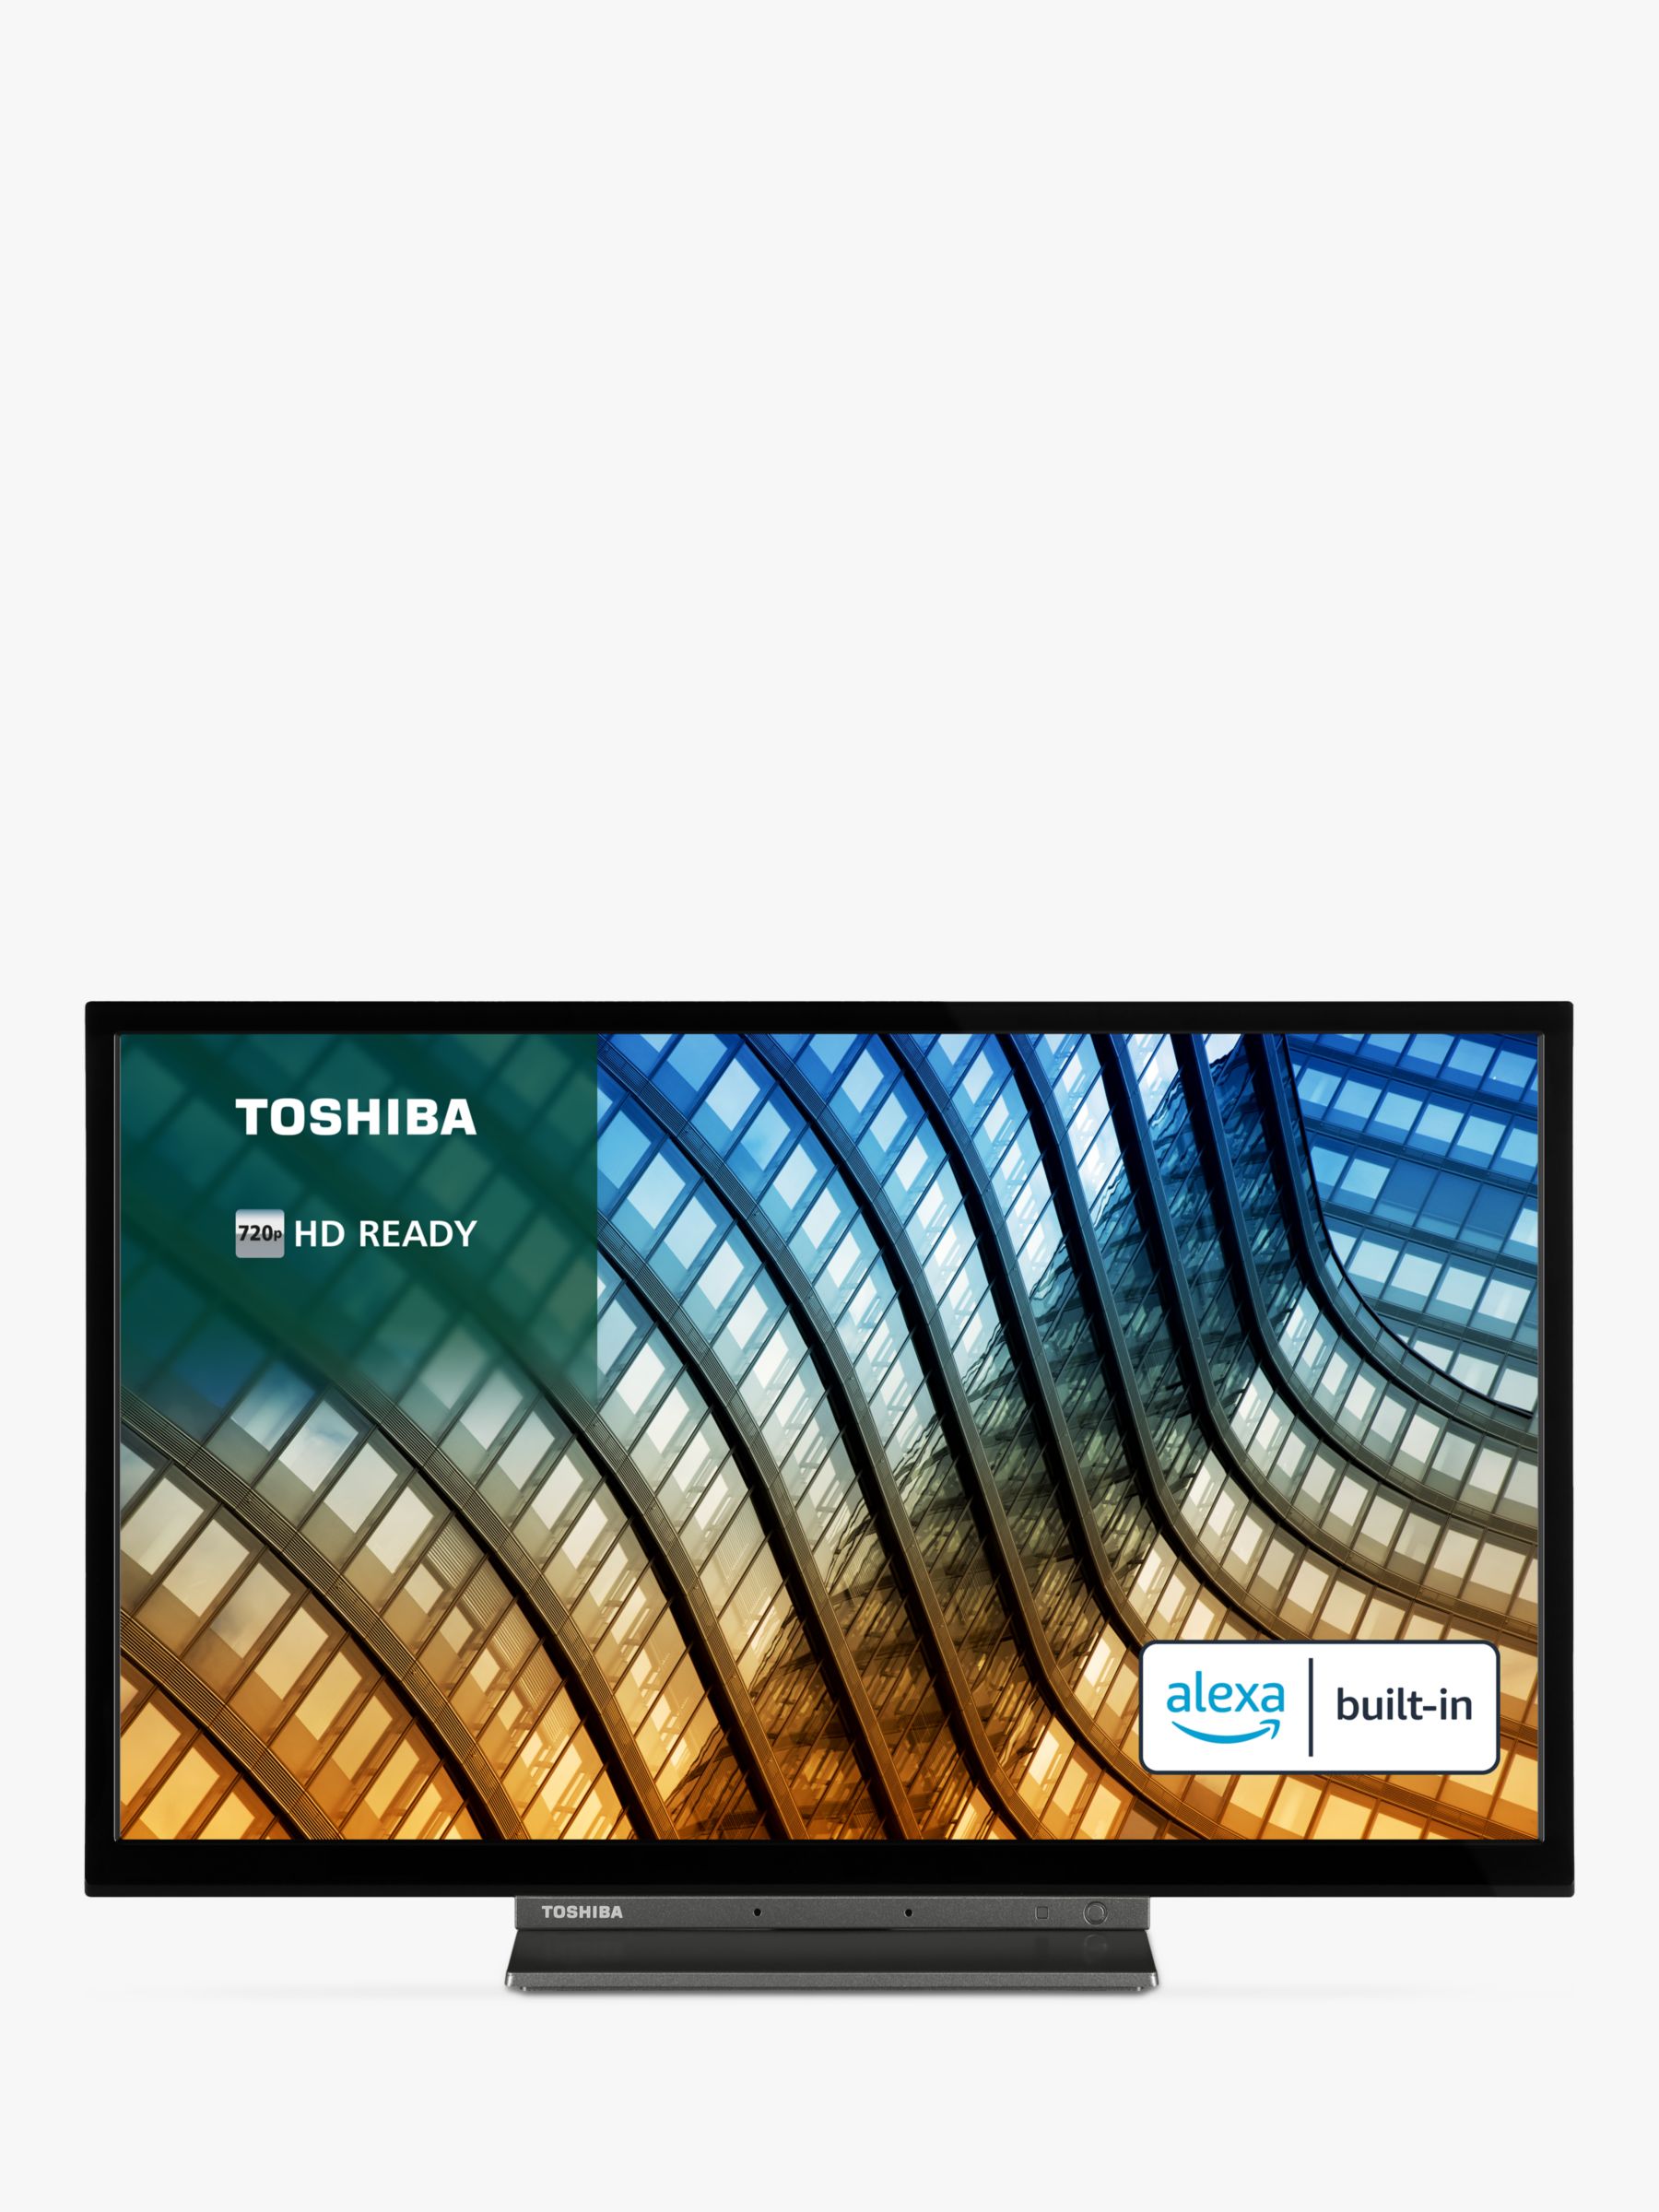 LG 32LQ630B6LA (2022) LED HDR HD Ready 720p Smart TV, 32 inch with Freeview  HD/Freesat